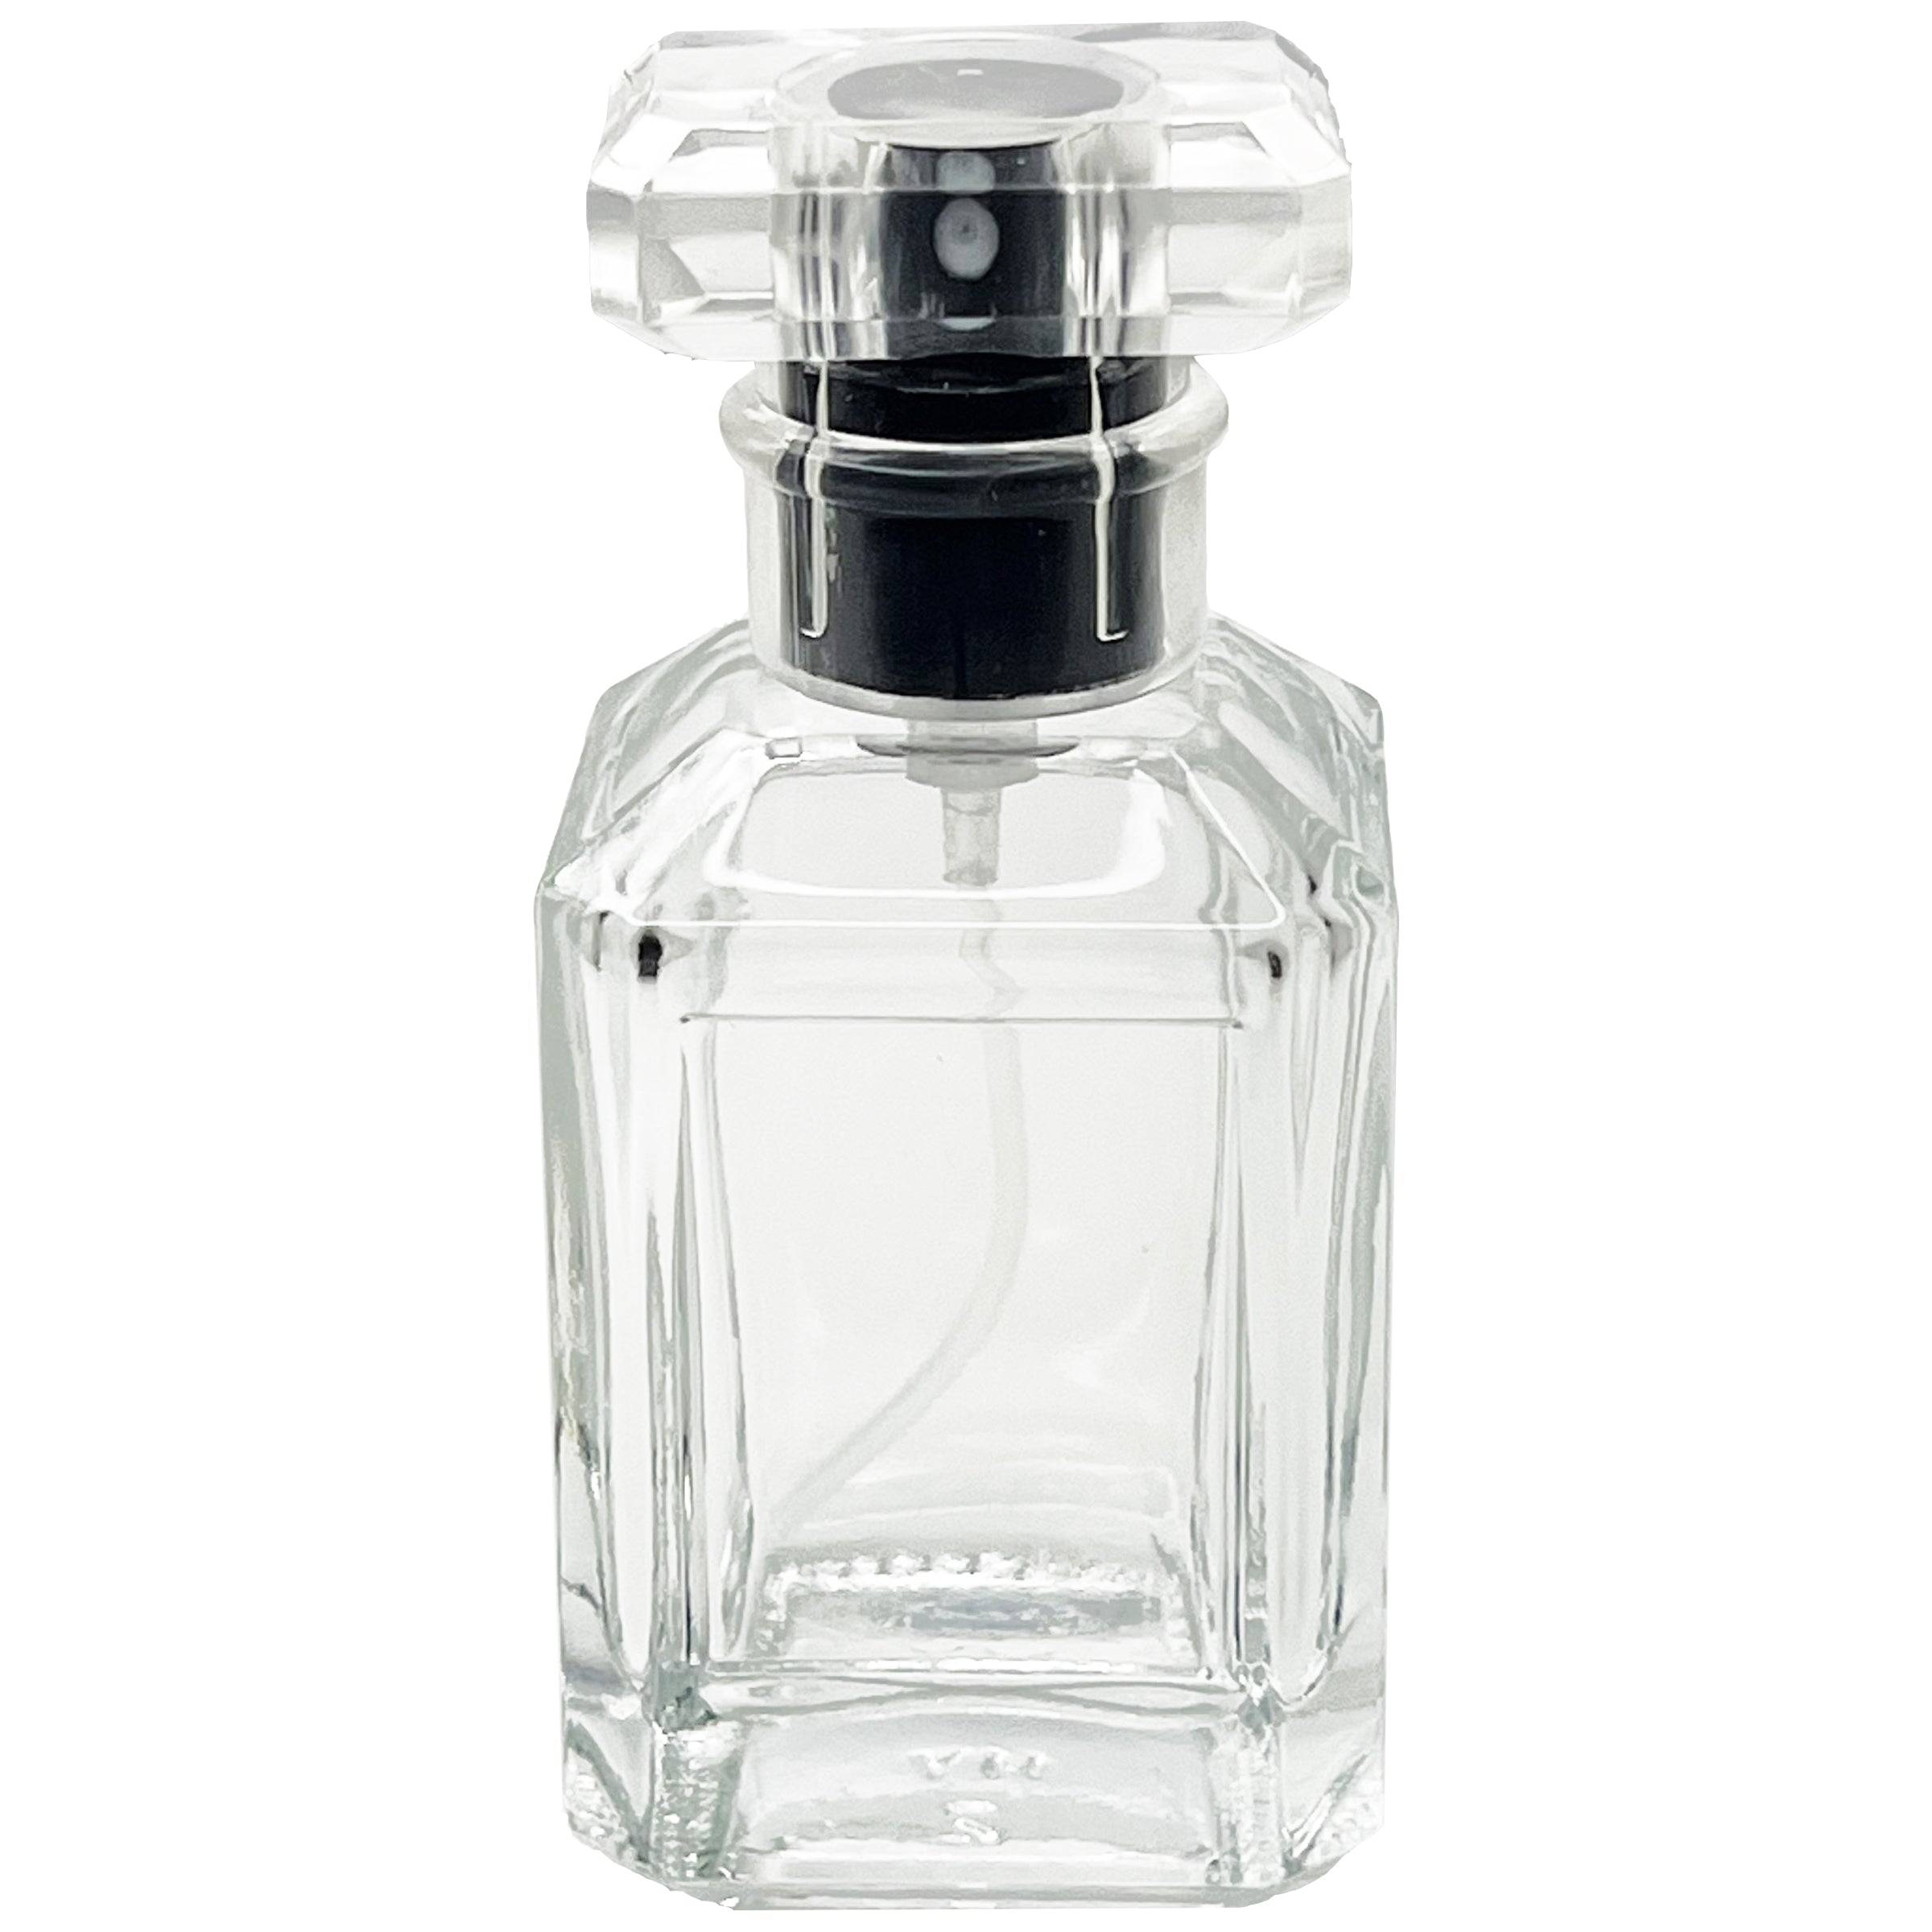 30ml 1oz beveled glass perfume spray bottles